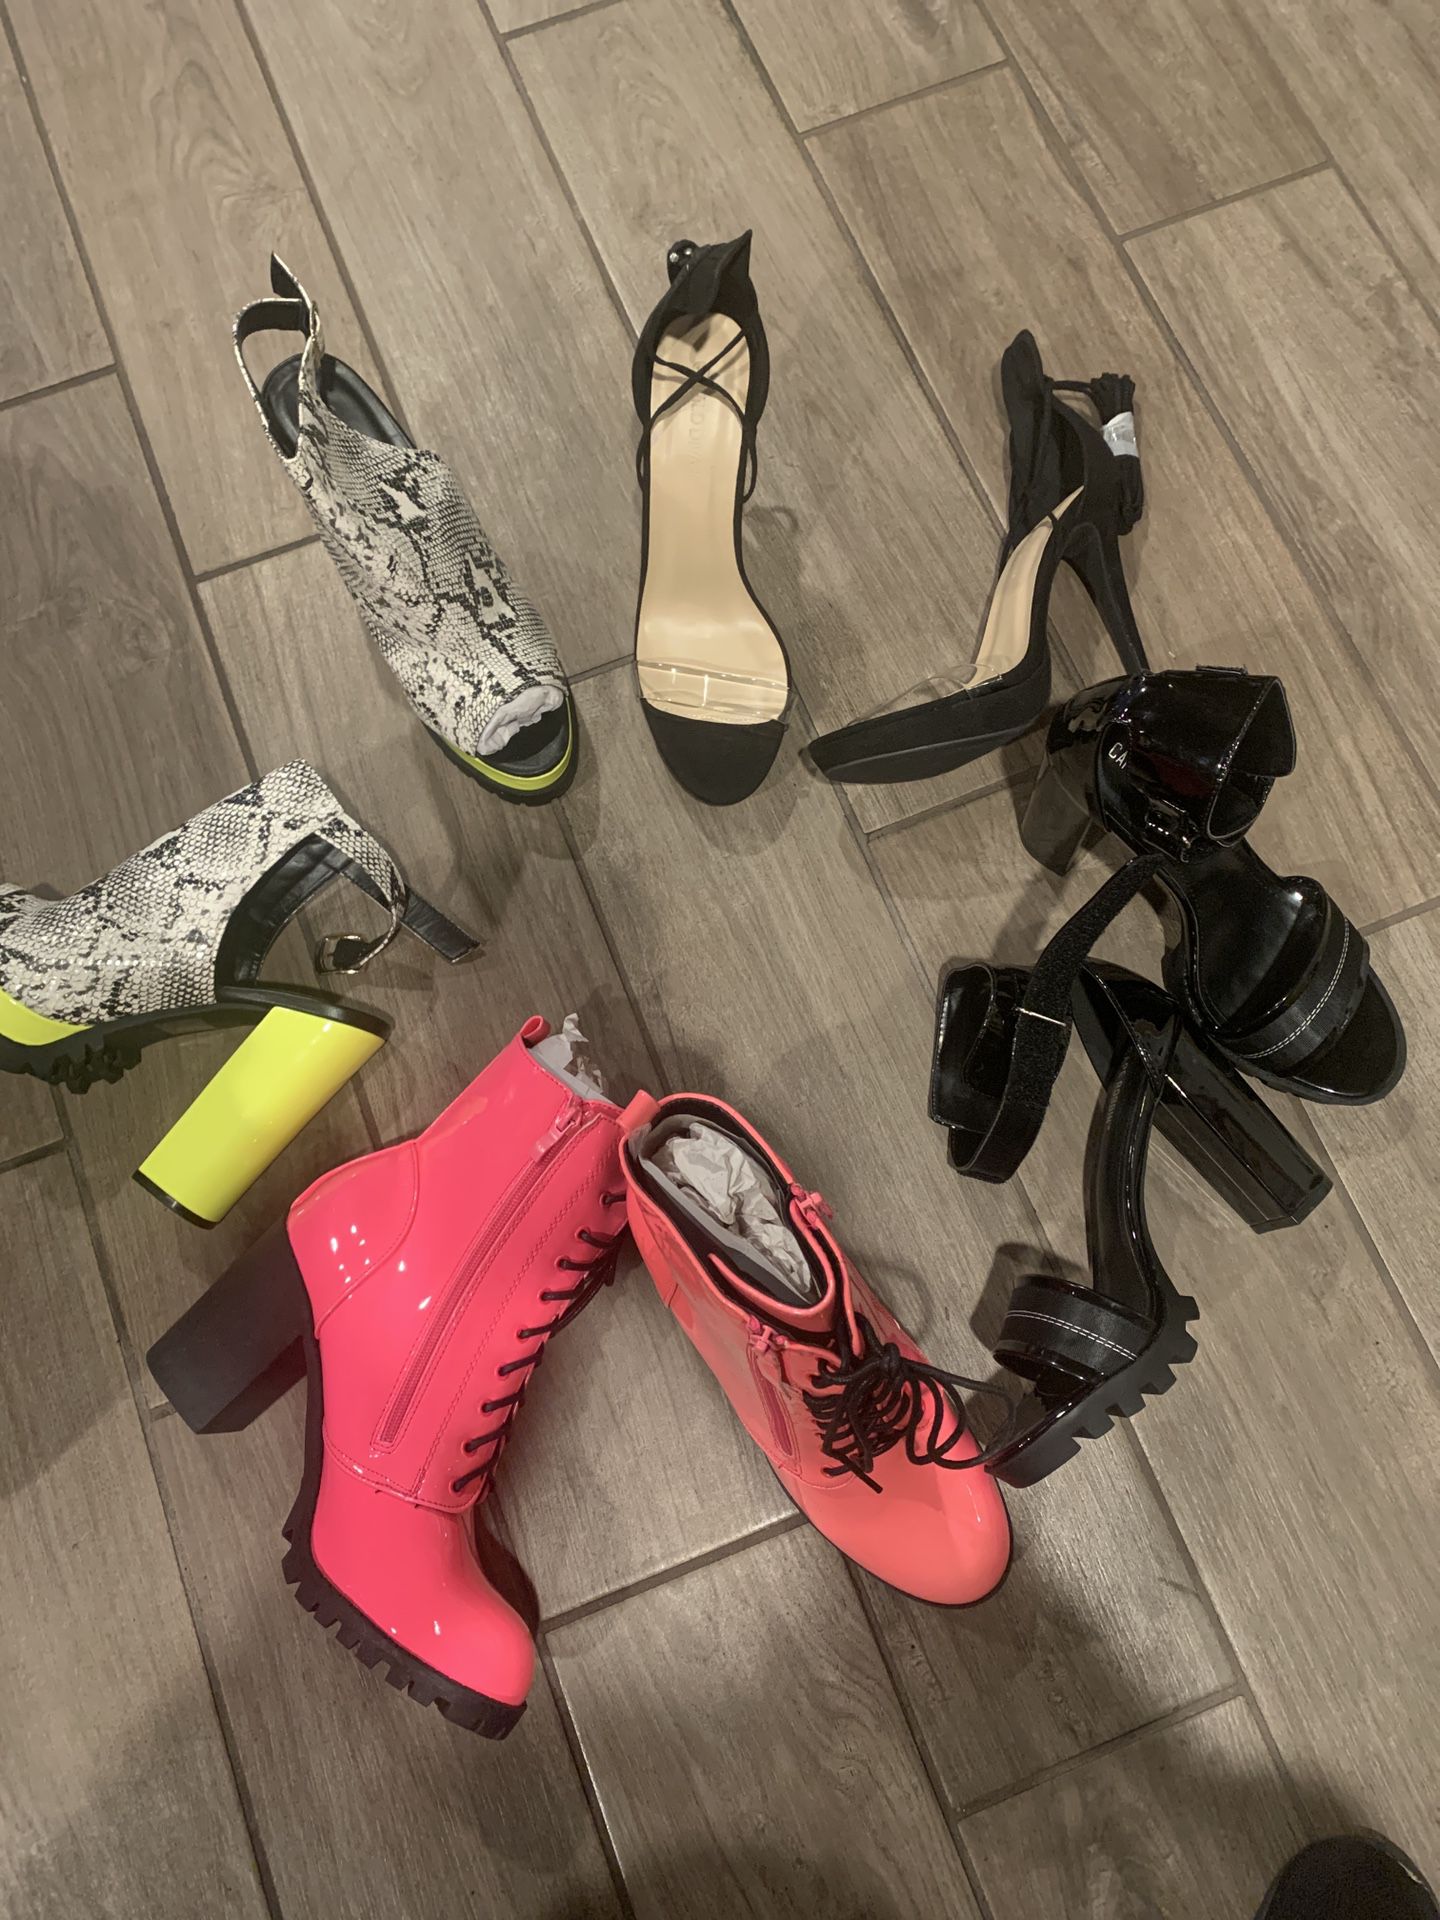 #shoes #boots #new #fashion #bundle #womens #Cape Moda #wild Diva